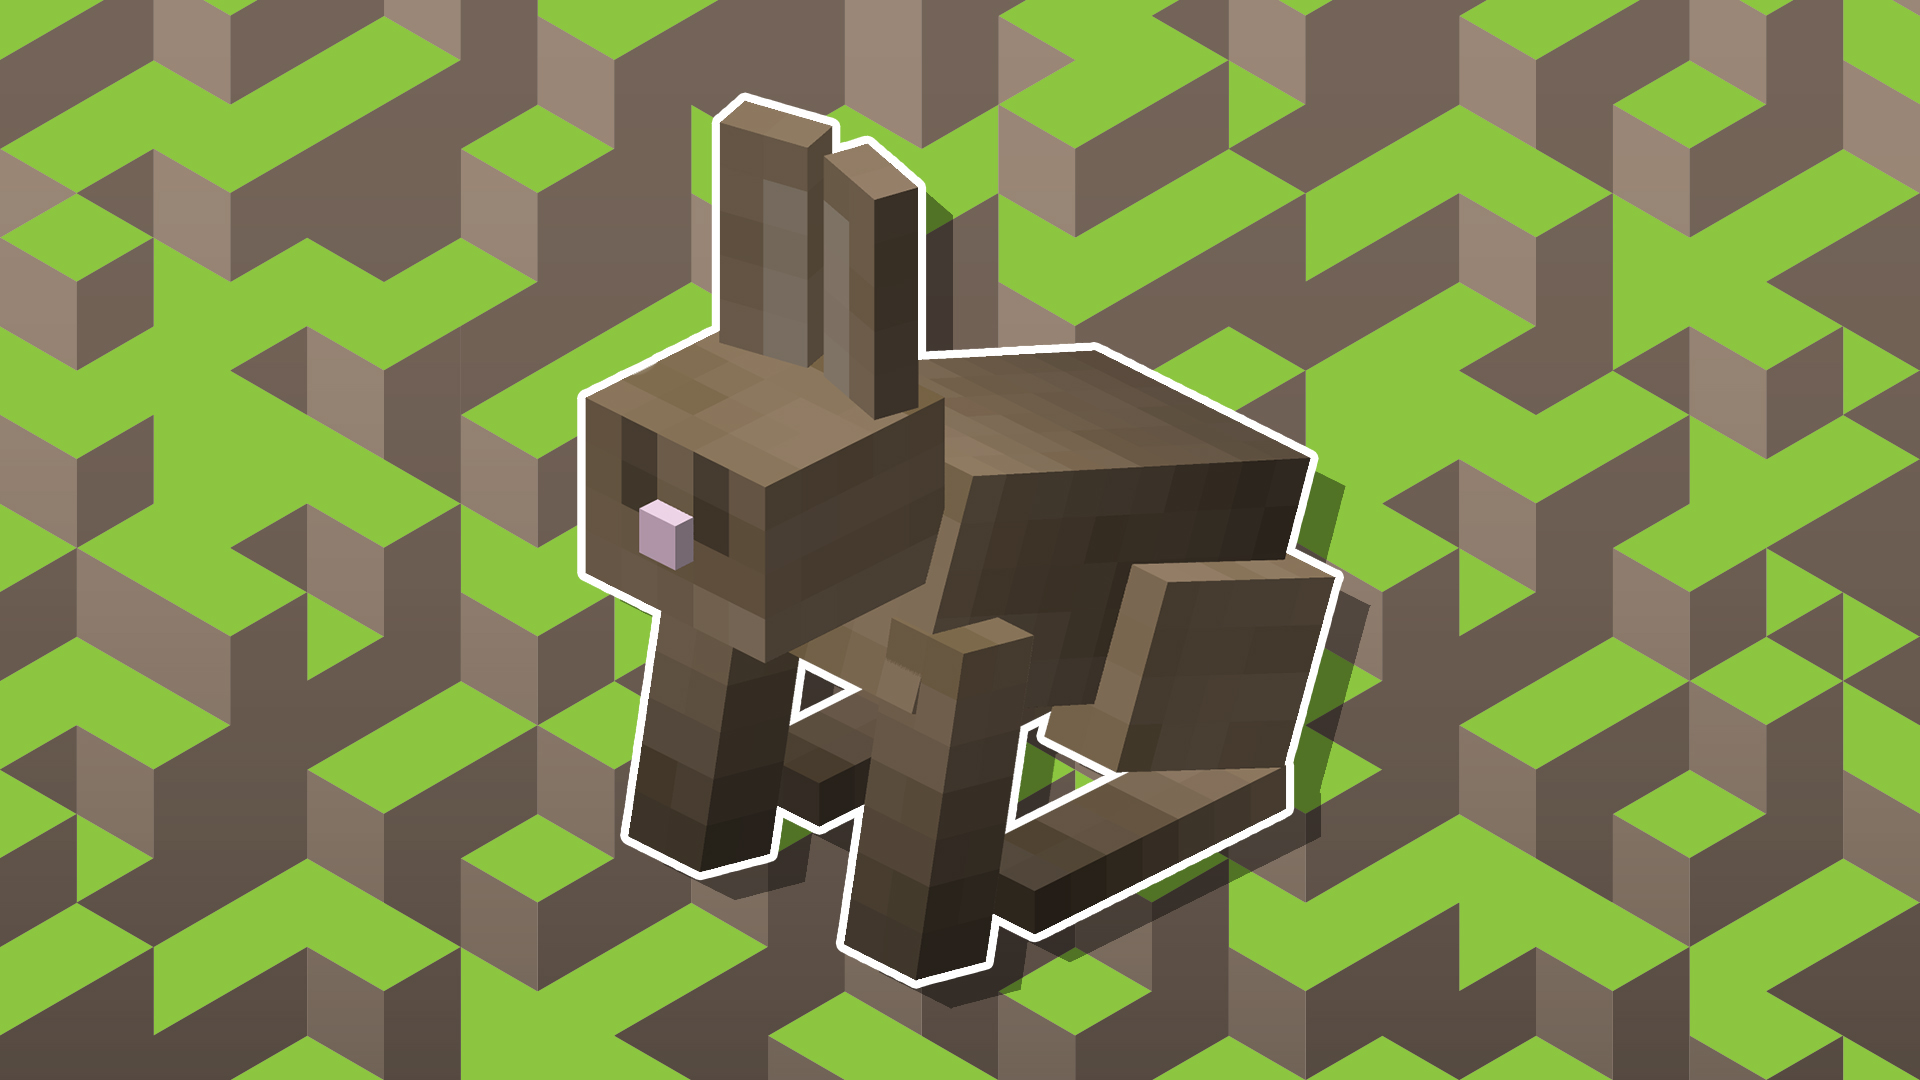 A Minecraft bunny